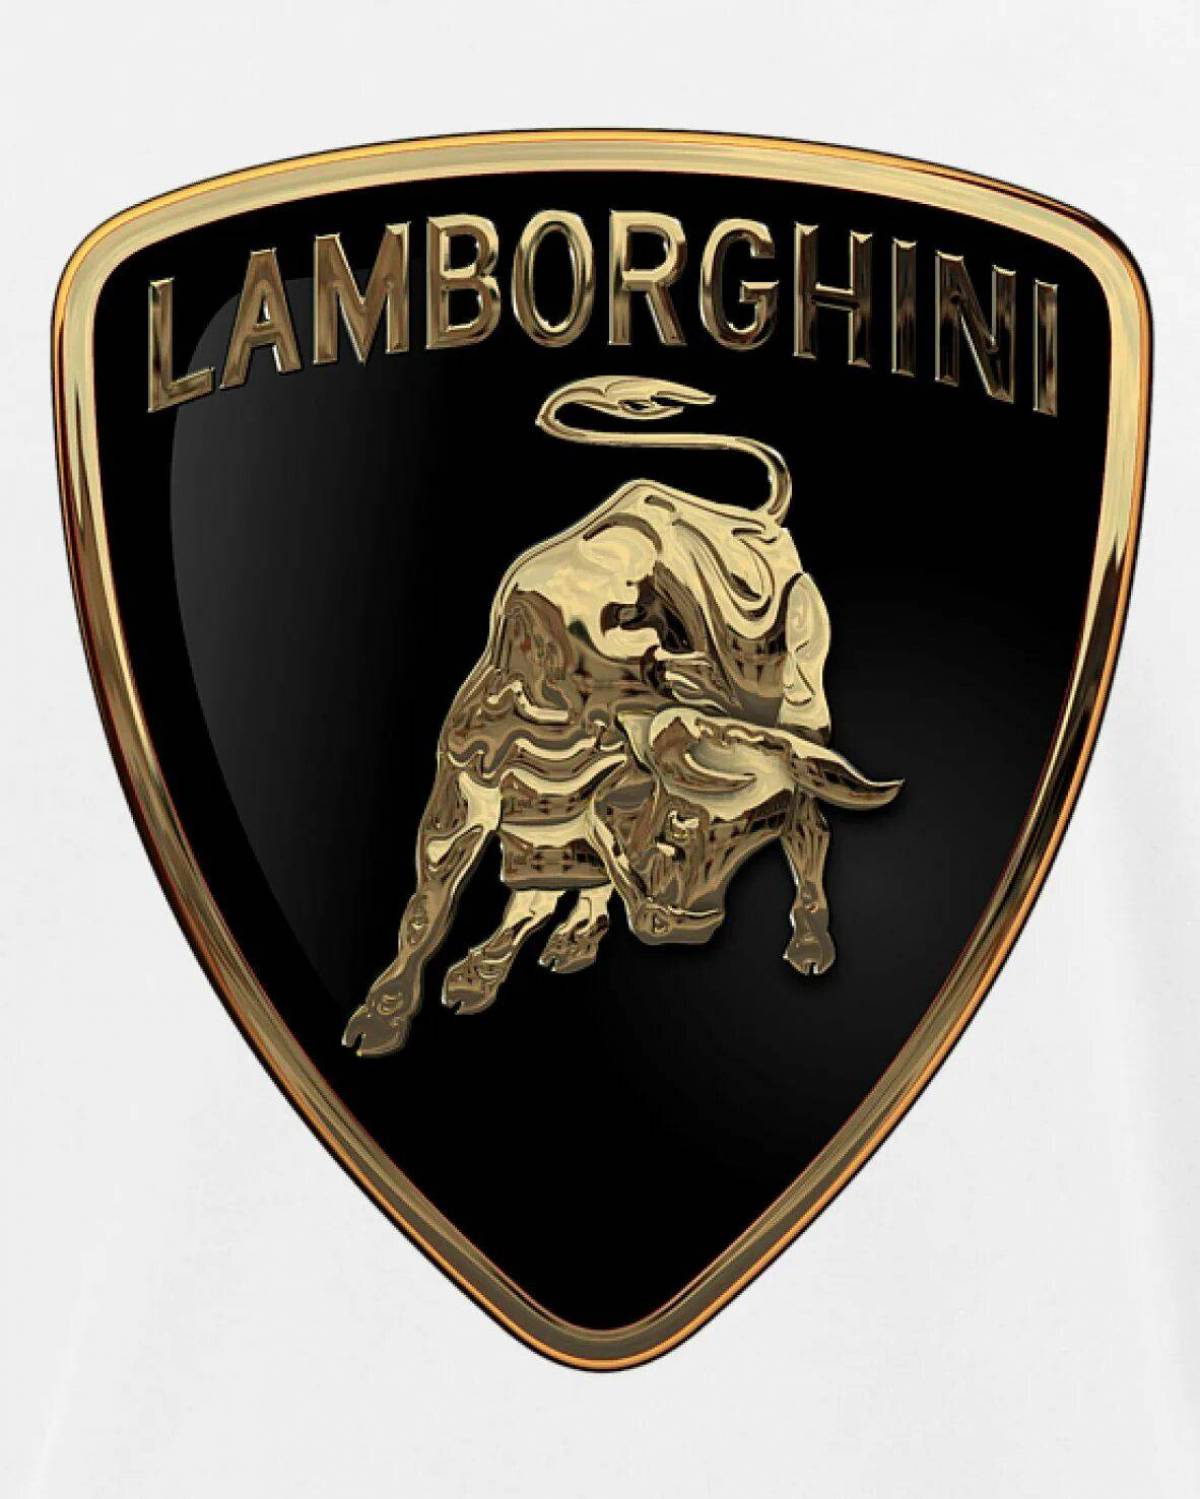 Ламба значок. Марки автомобилей Ламборджини. Марка машины Ламборгини значок. Логотип Ламборджини. Фирменный знак Ламборджини.